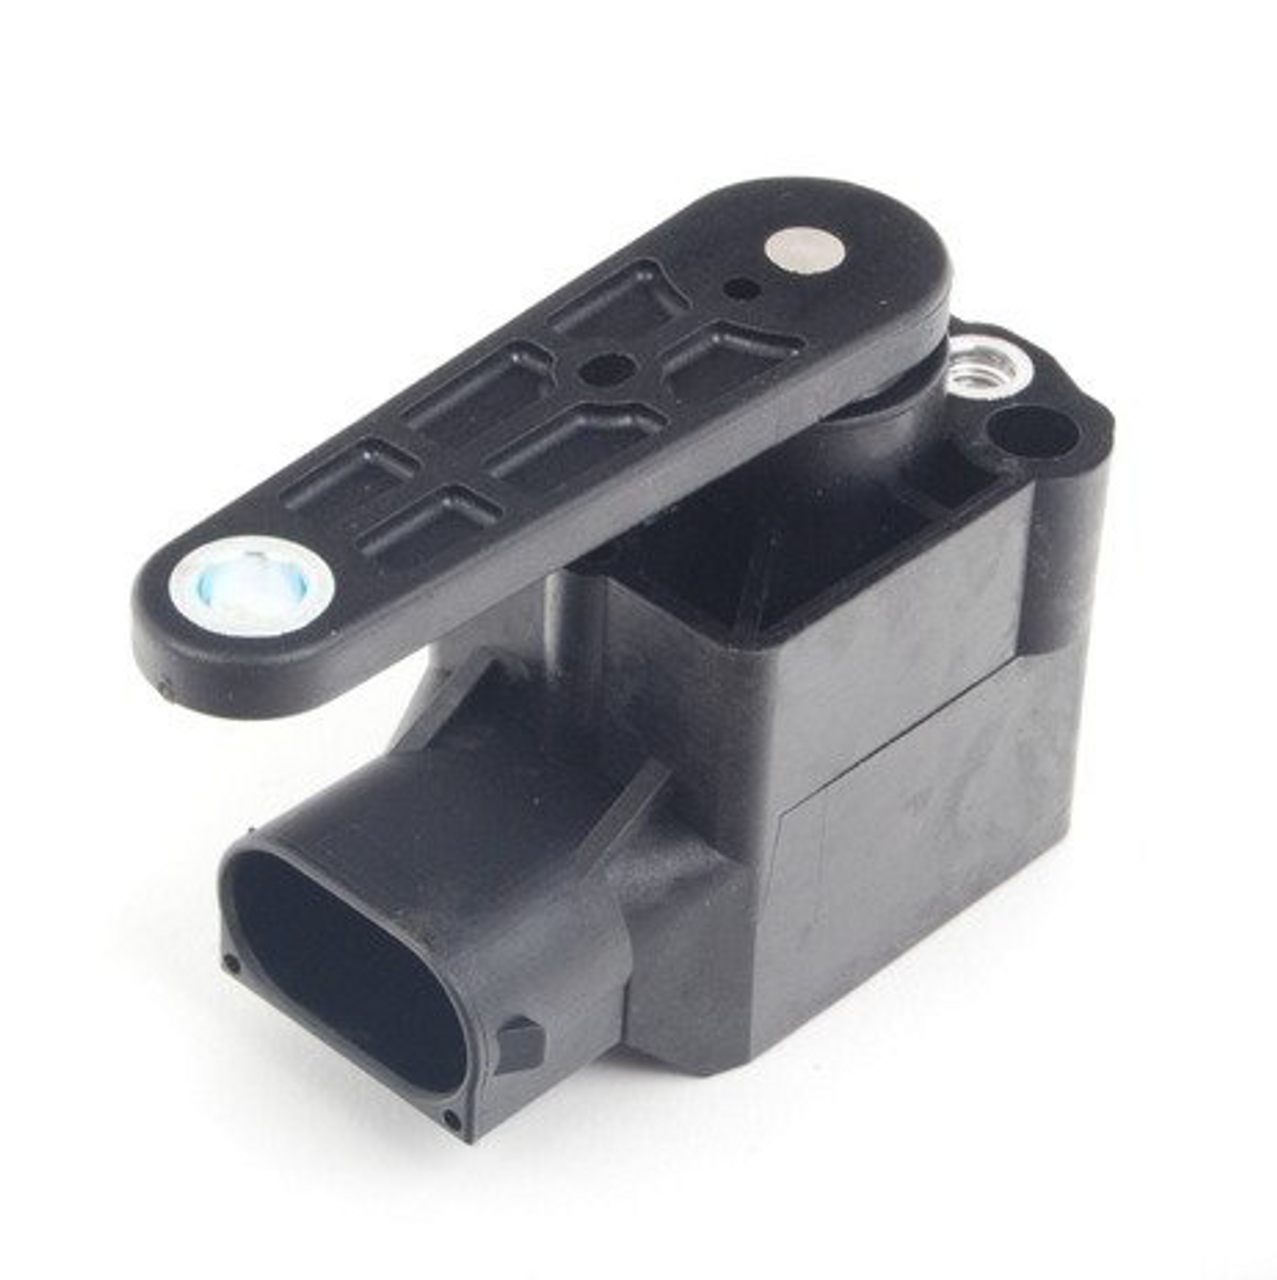 BMW Headlight Level Sensor - OEM Supplier 37146784697 